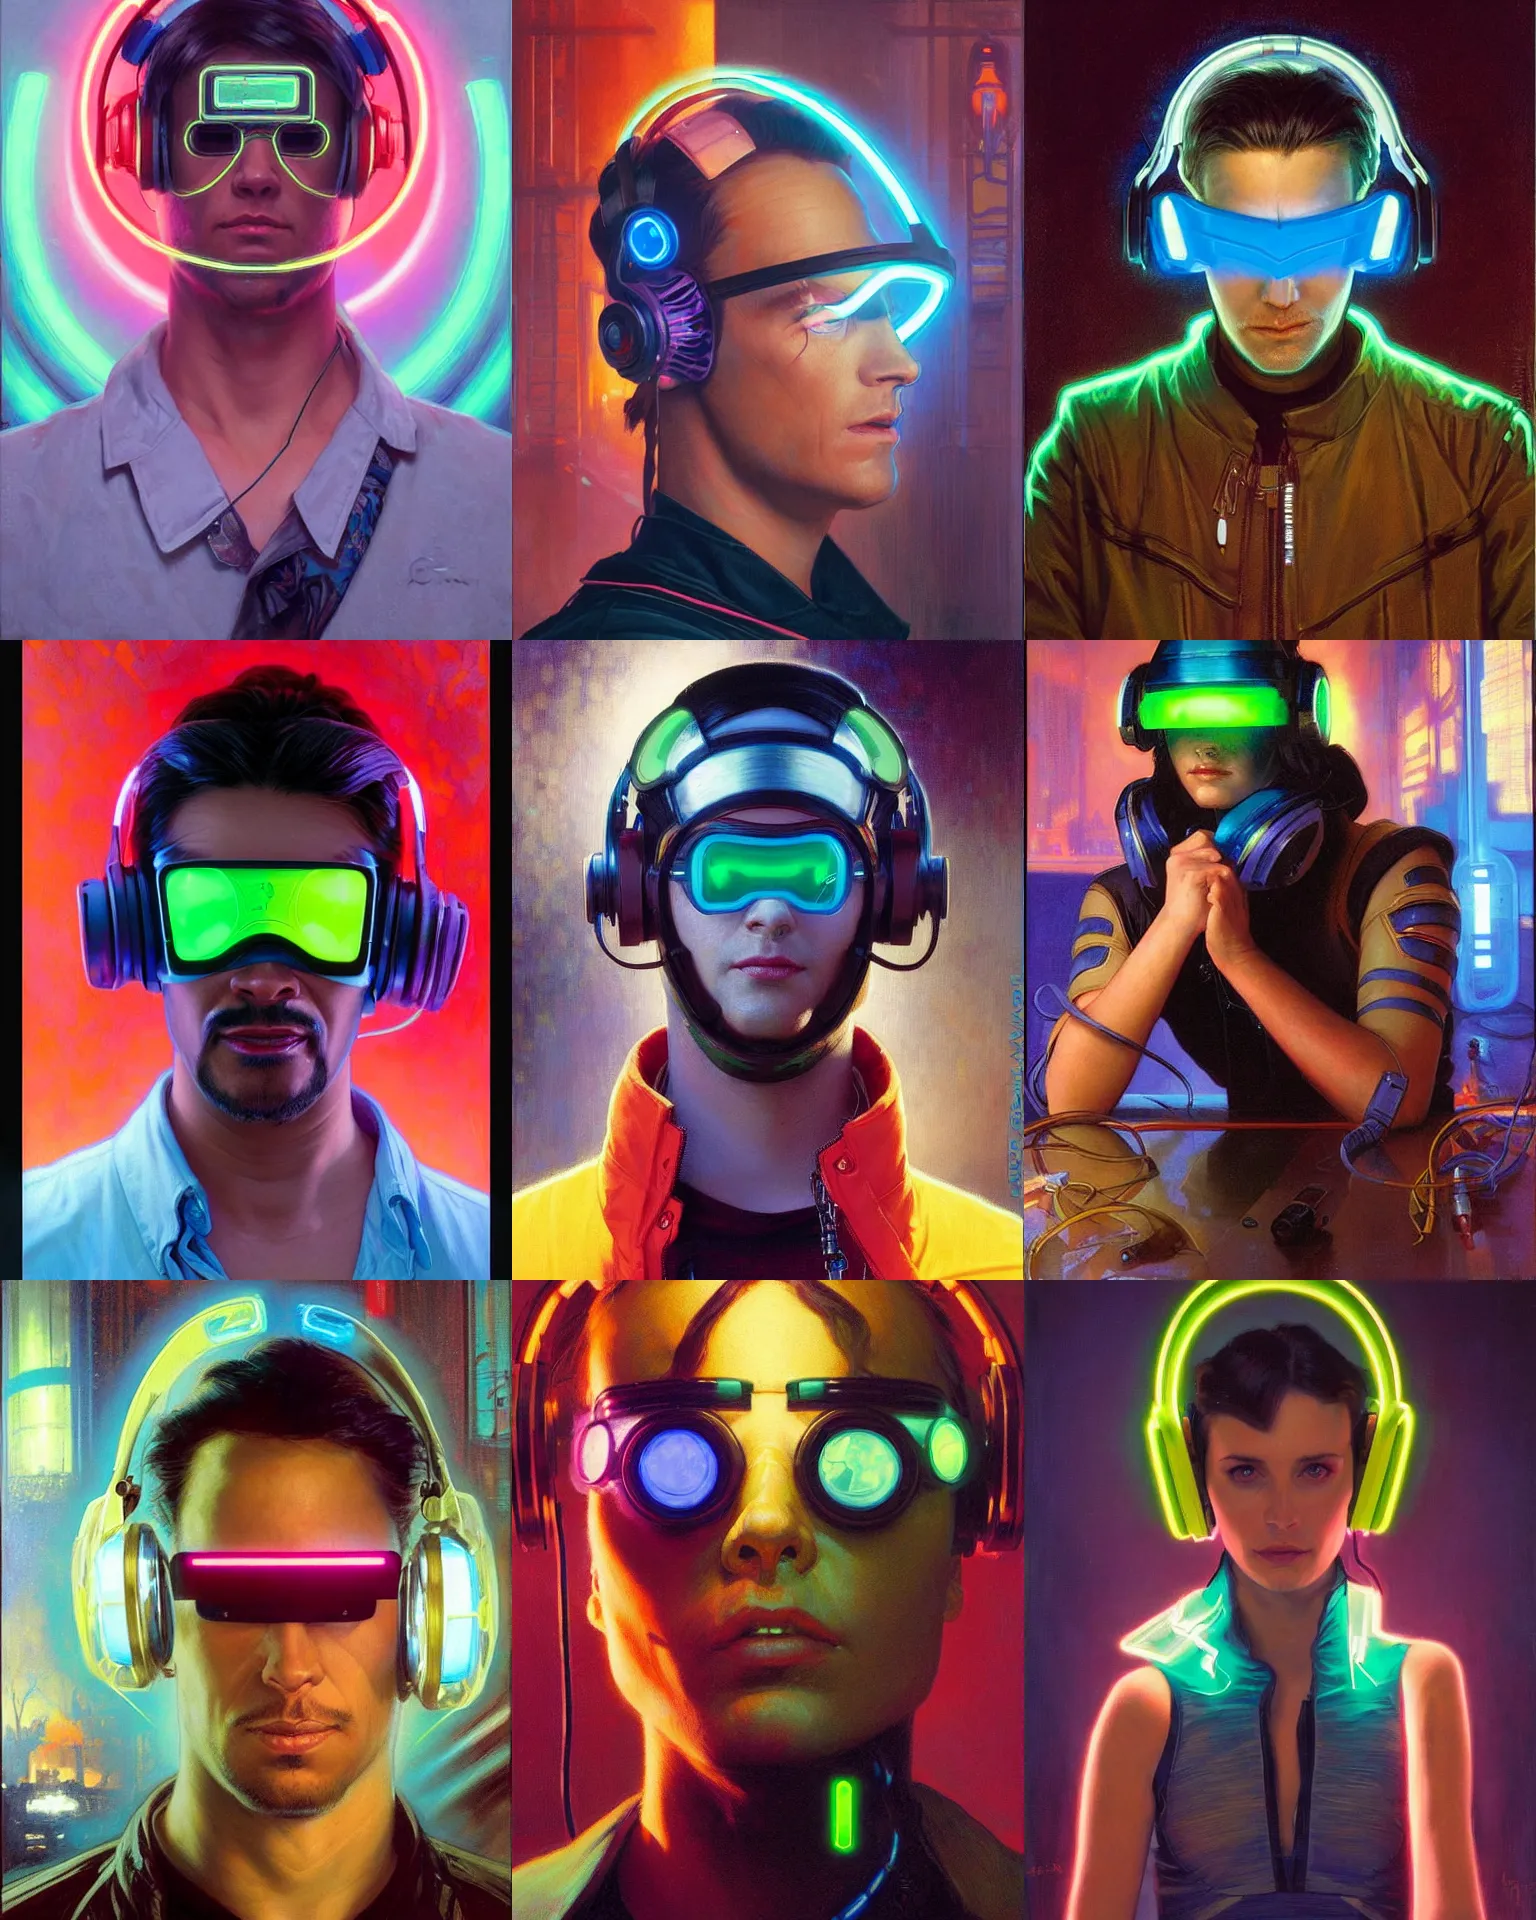 Prompt: neon cyberpunk hacker with glowing geordi visor over eyes and headphones headshot portrait painting by donato giancola, rhads, loish, alphonse mucha, mead schaeffer fashion photography